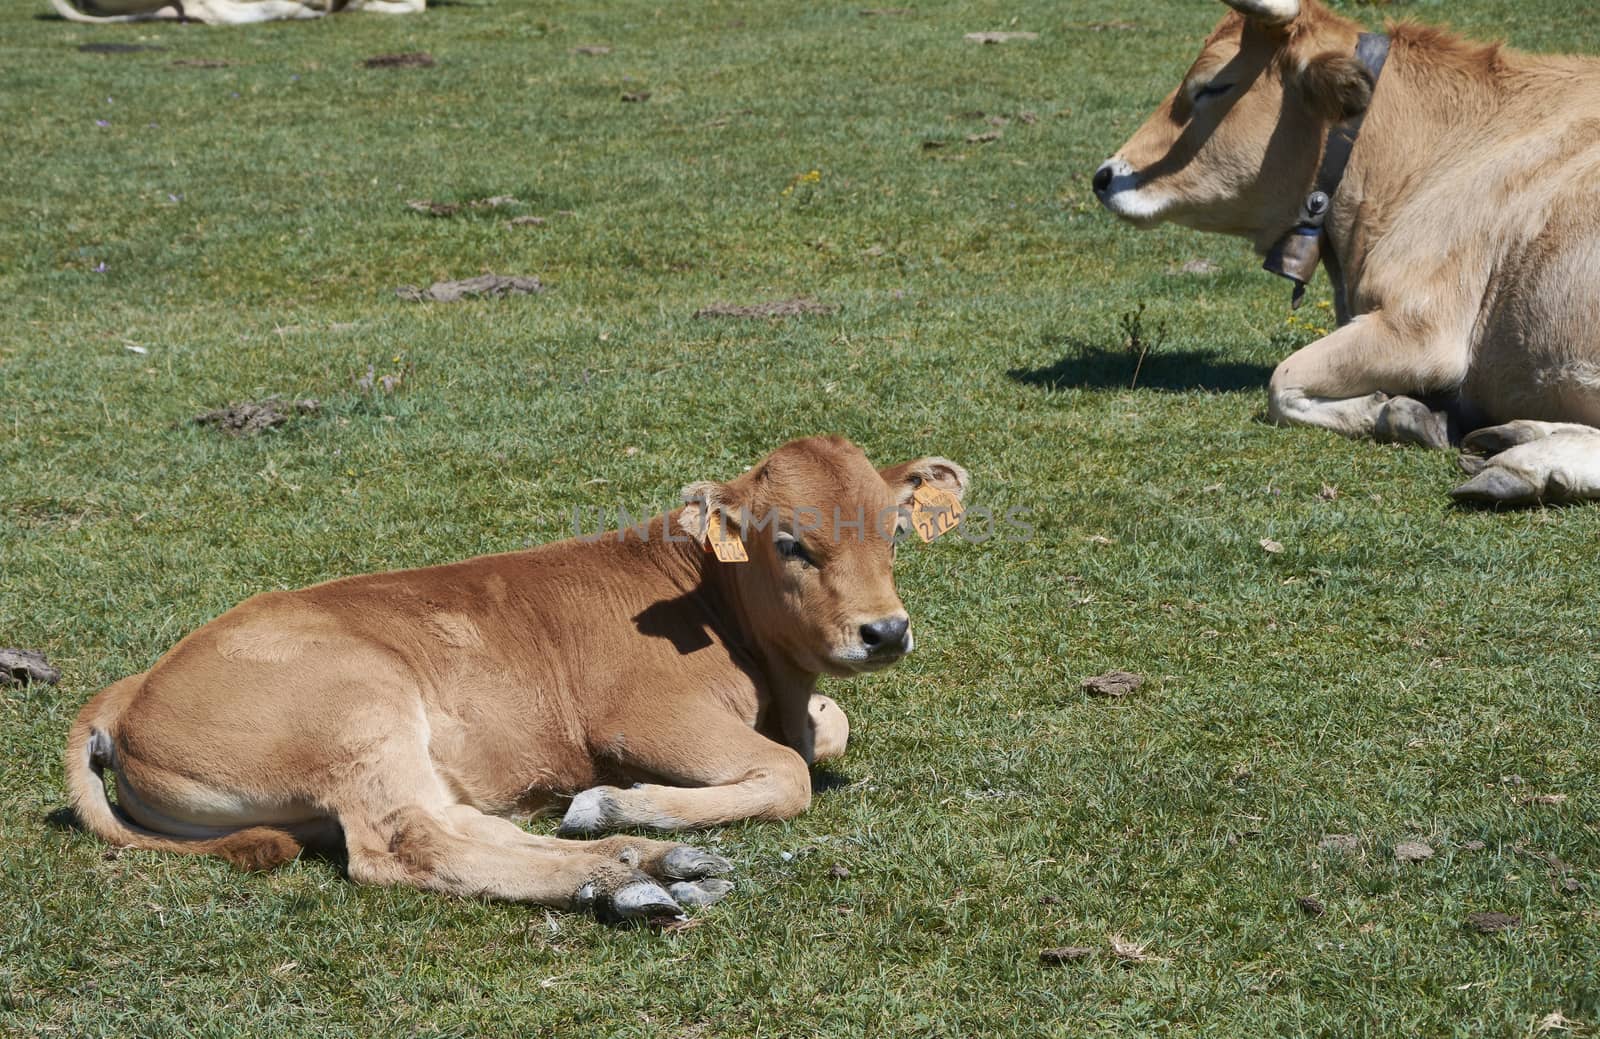 Two cows lying on the grass sunbathing by raul_ruiz